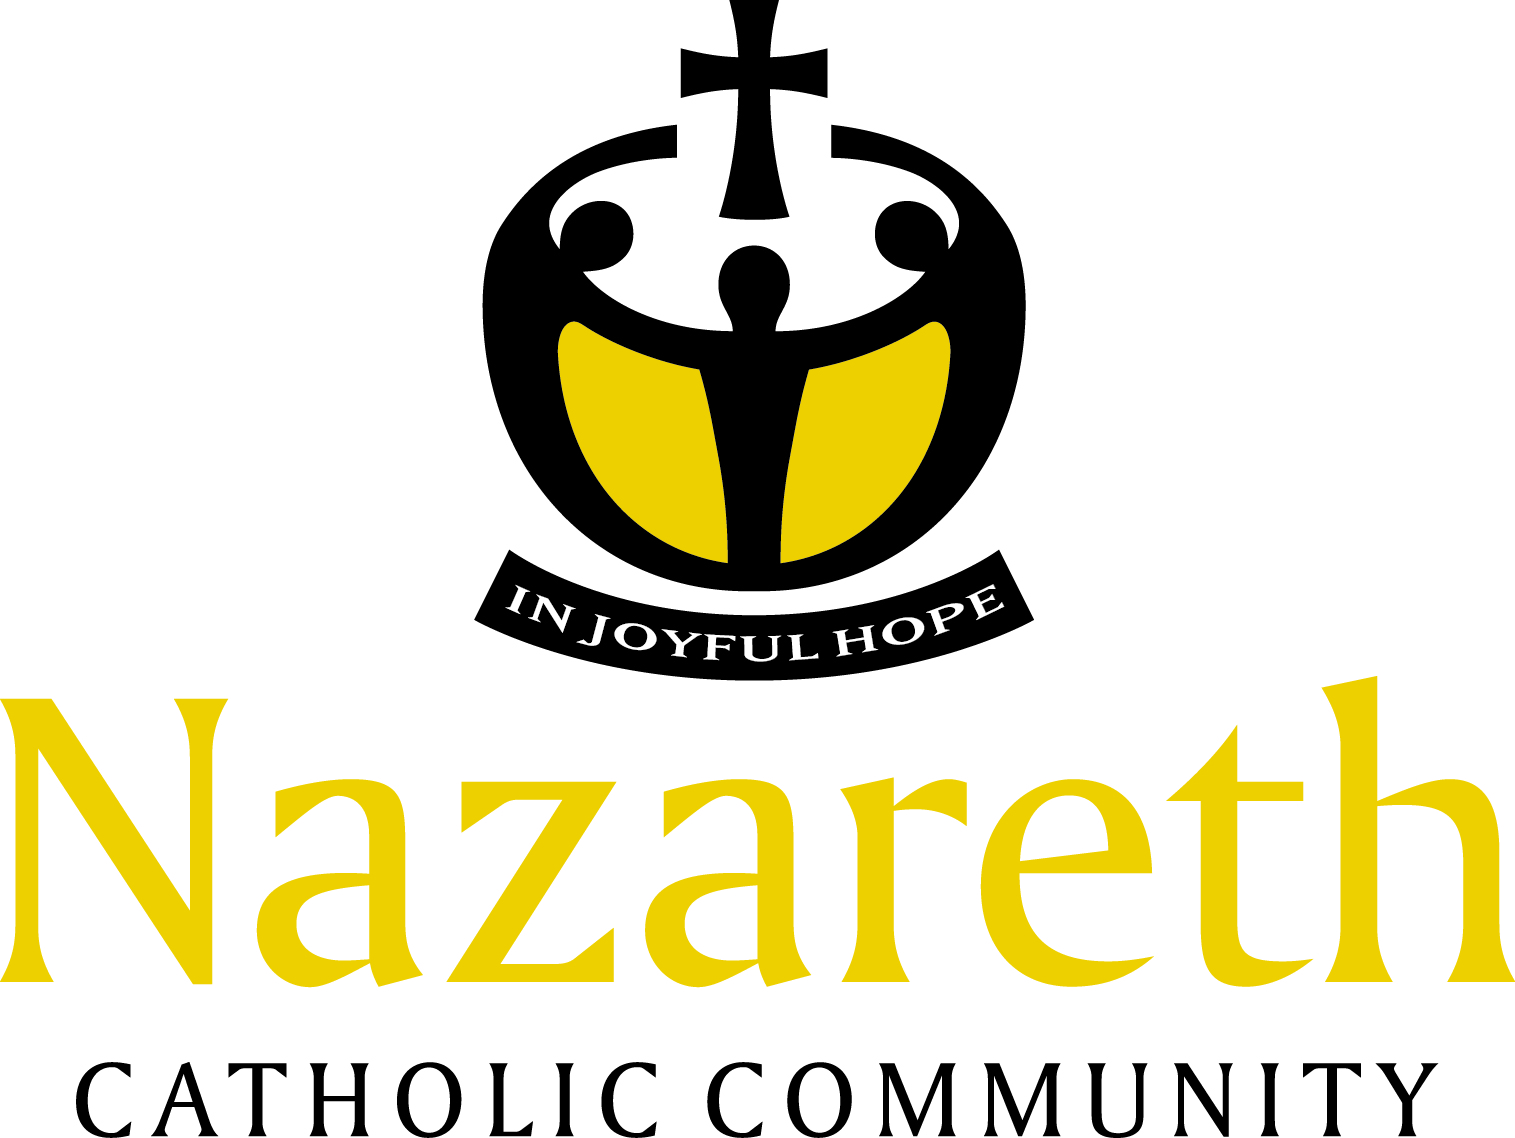 Nazareth Catholic Community